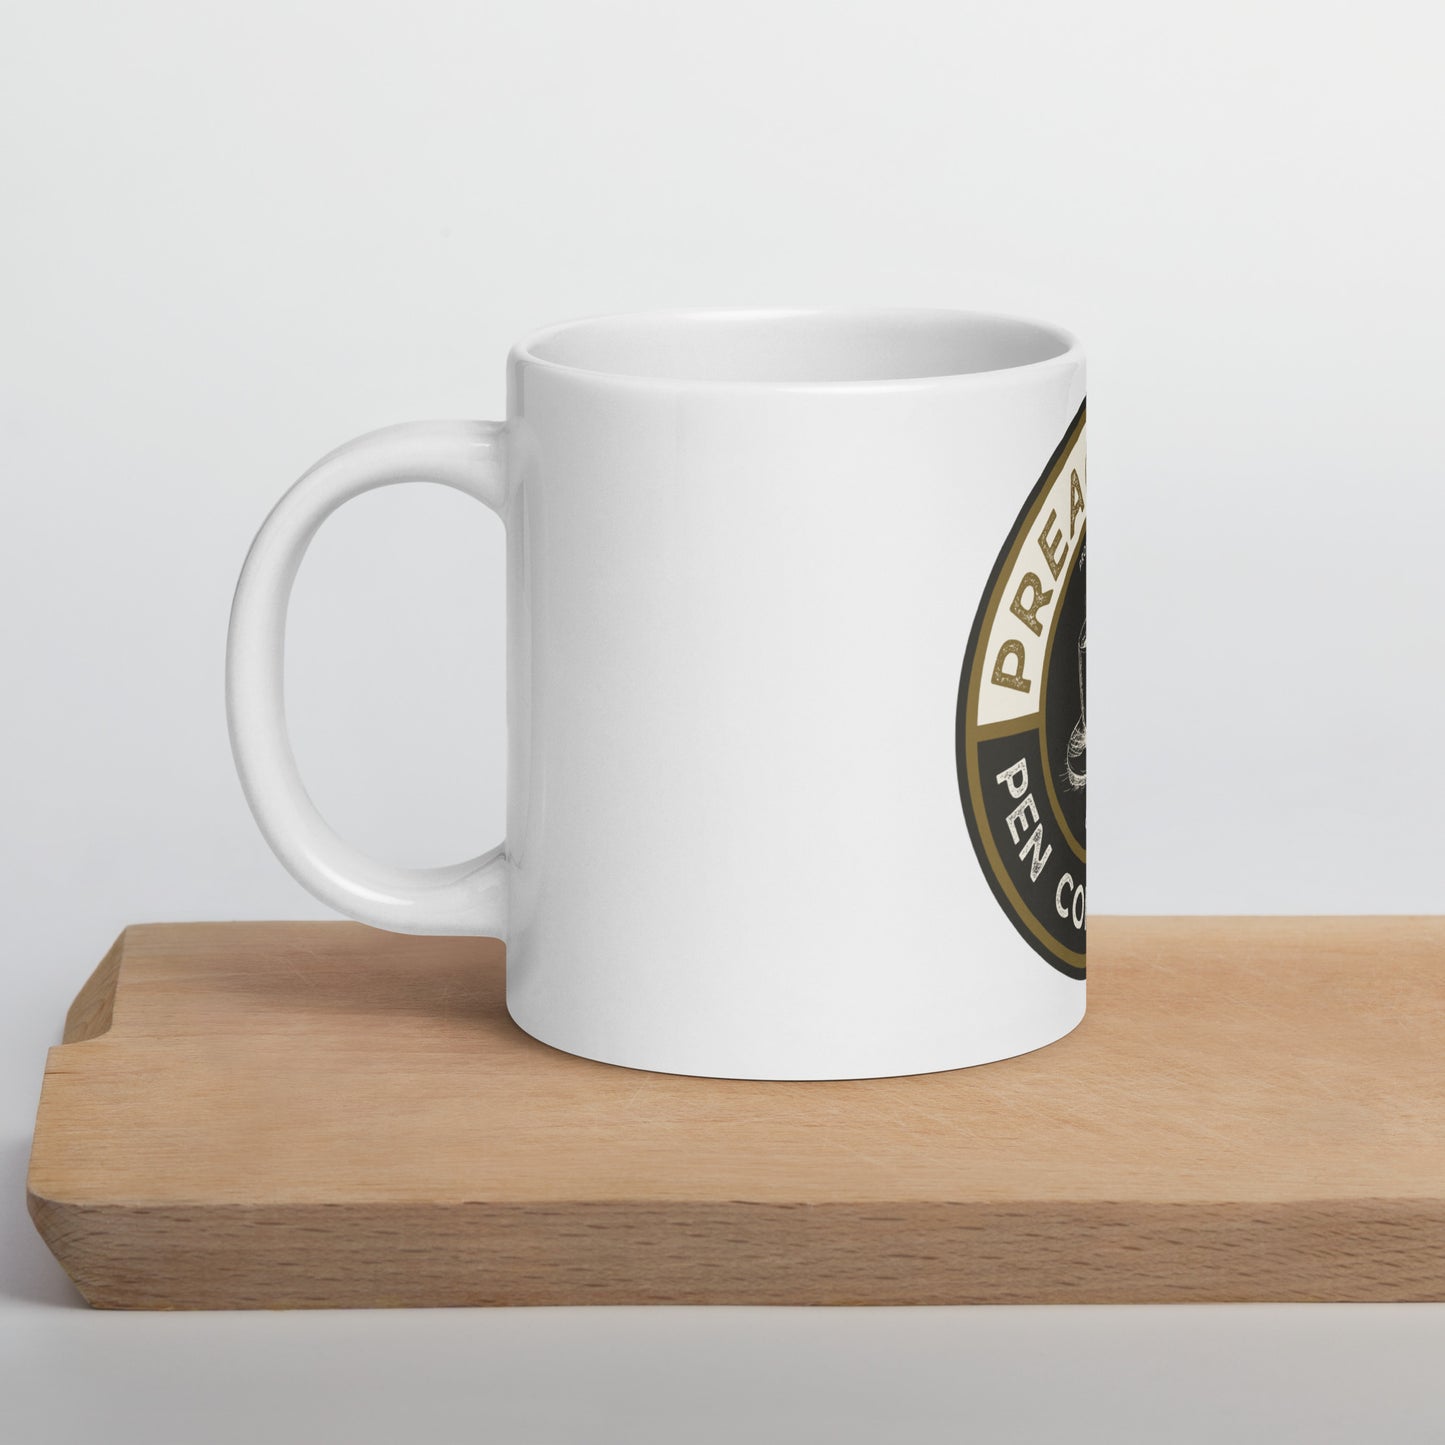 Preacher's Pen Coffee Mug